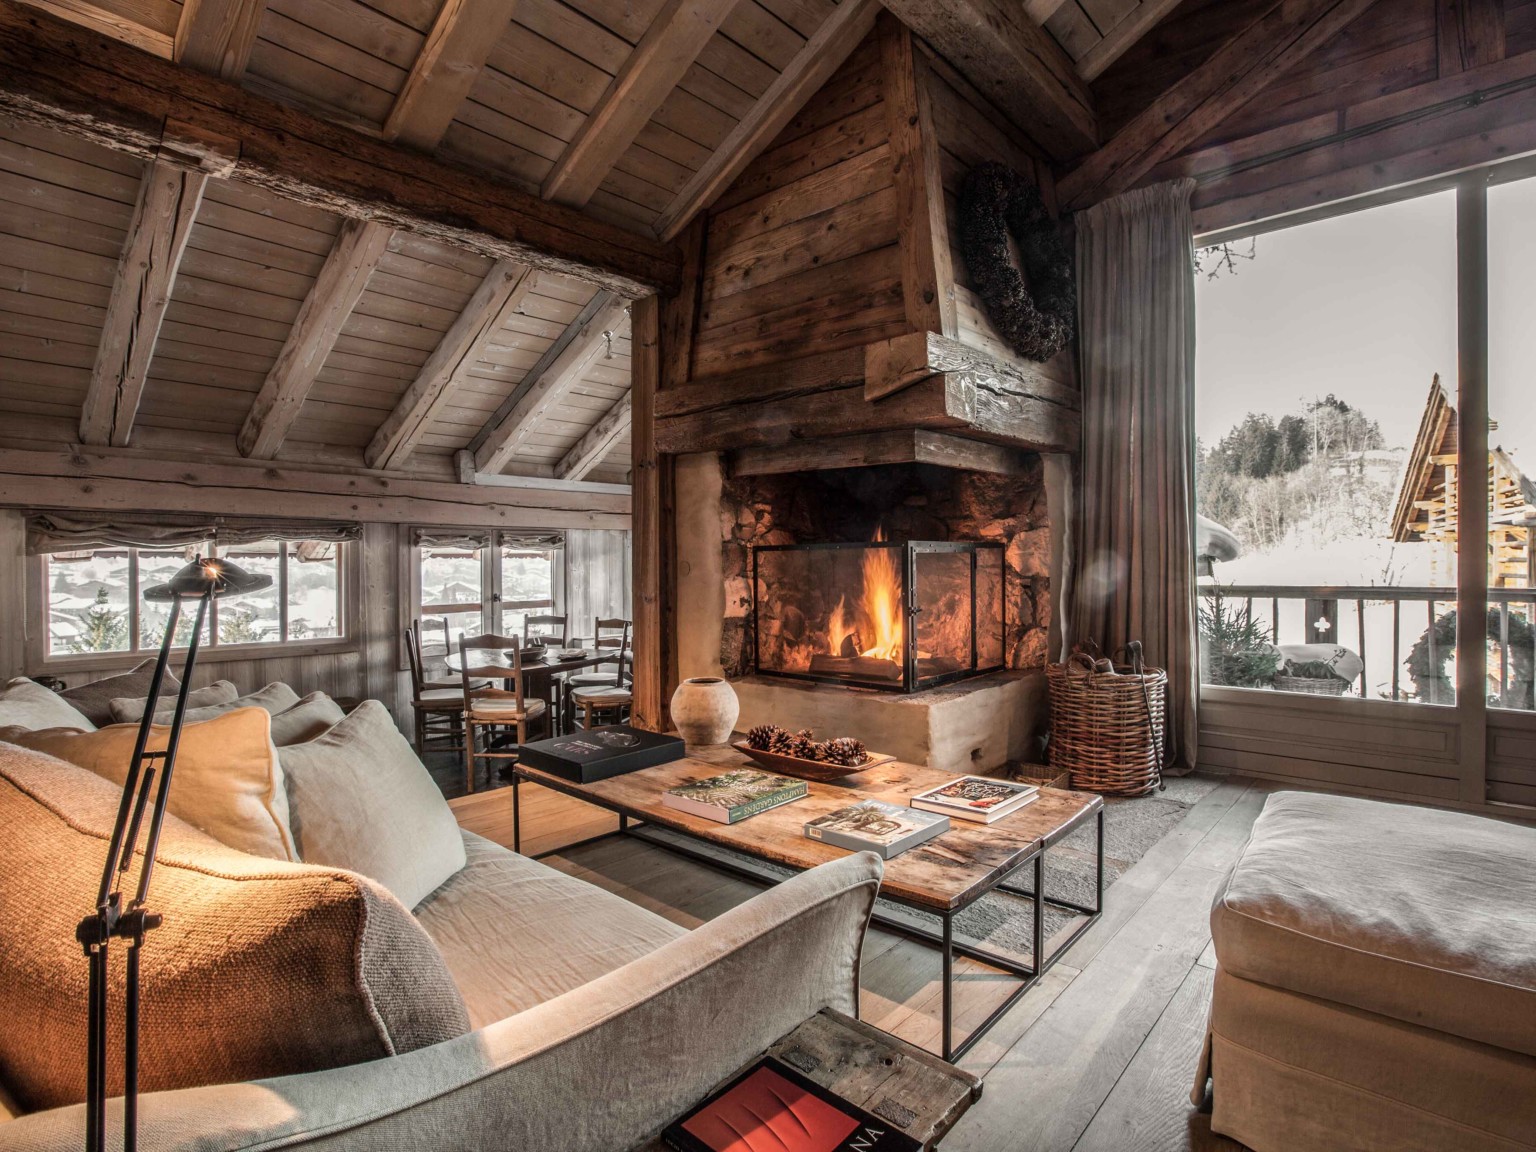 The best ski hotels this season | Mr & Mrs Smith